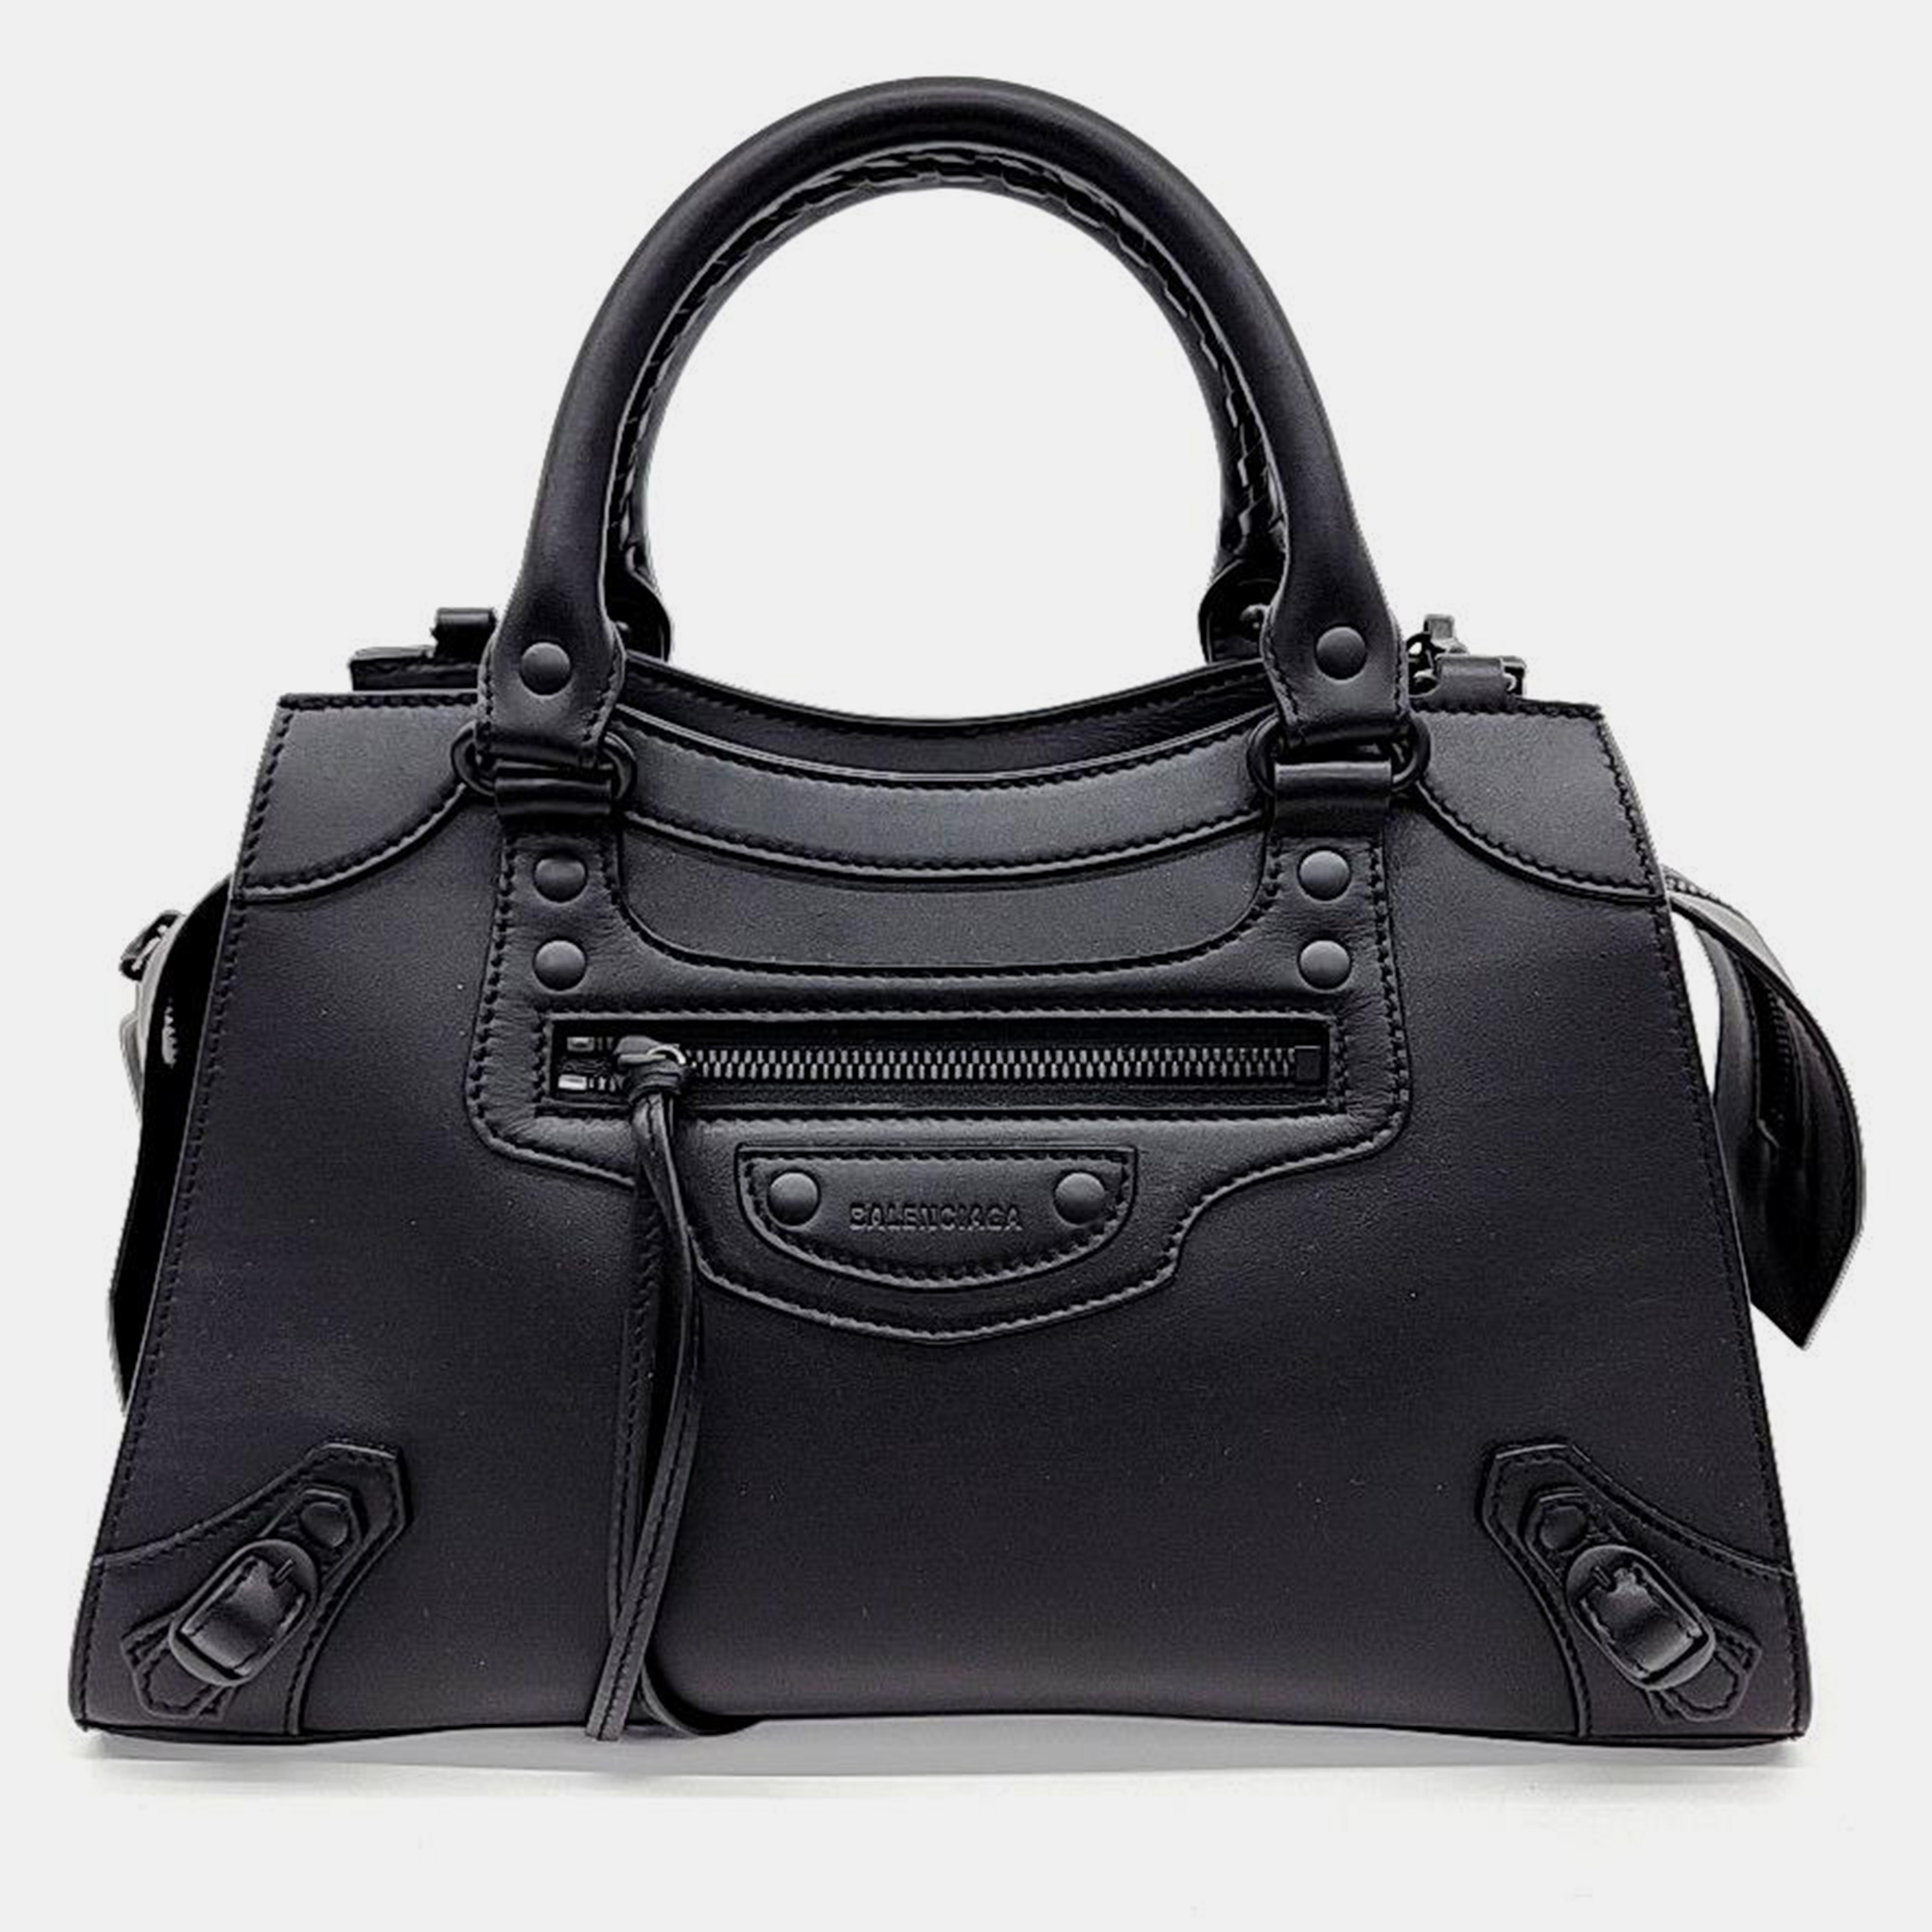 Balenciaga black leather neo classic satchel